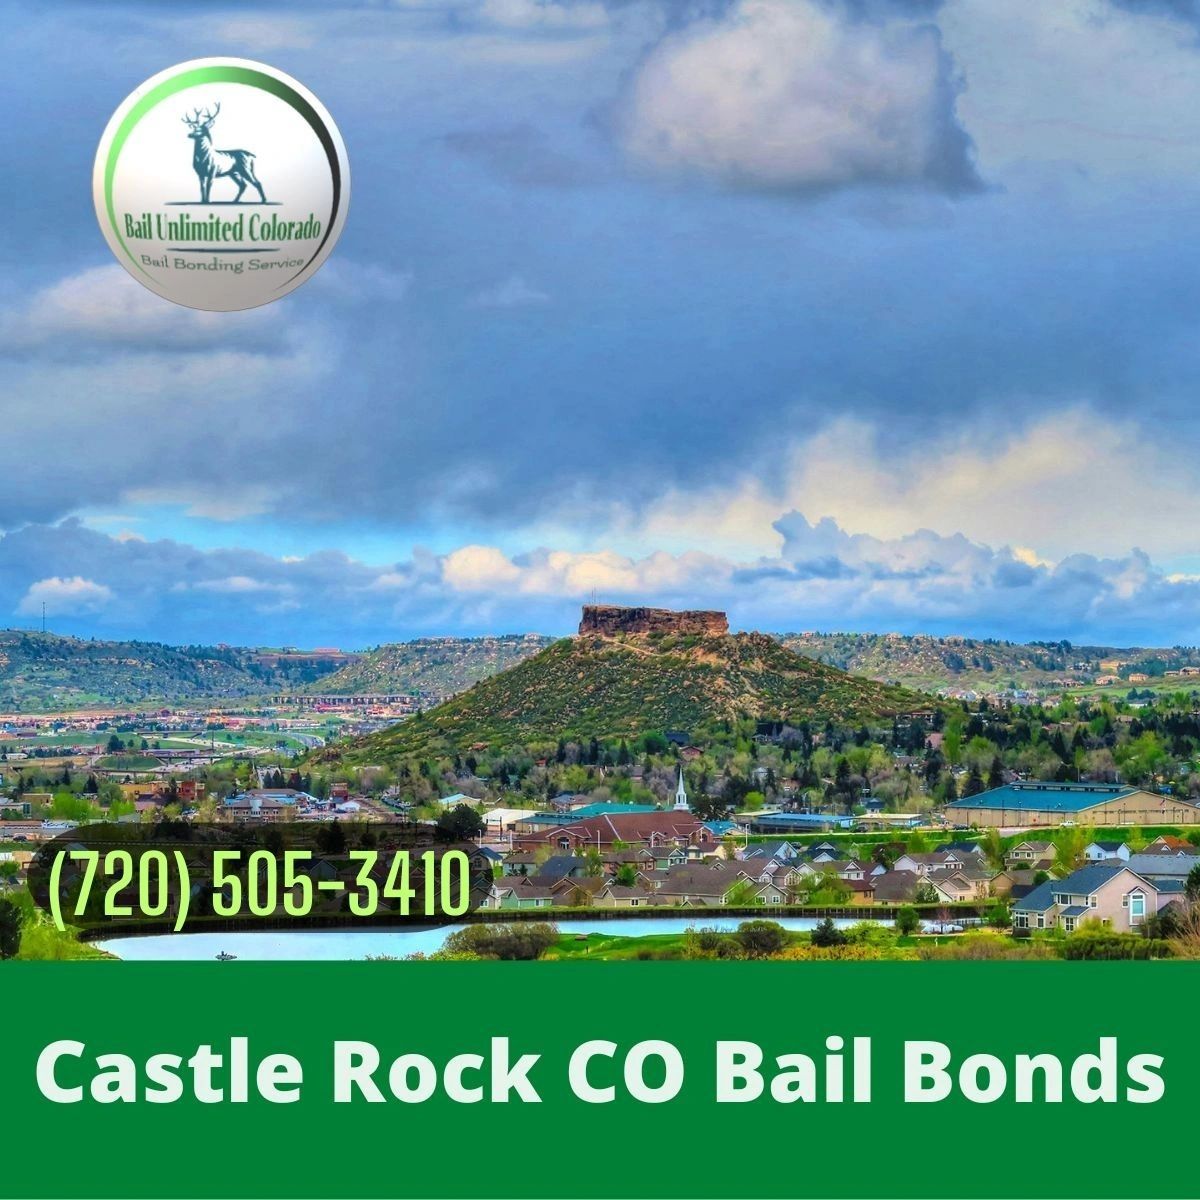 Castle Rock CO Bail Bonds (720) 505-3410 Bail Unlimited Colorado LOGO. Scenic Castle Rock